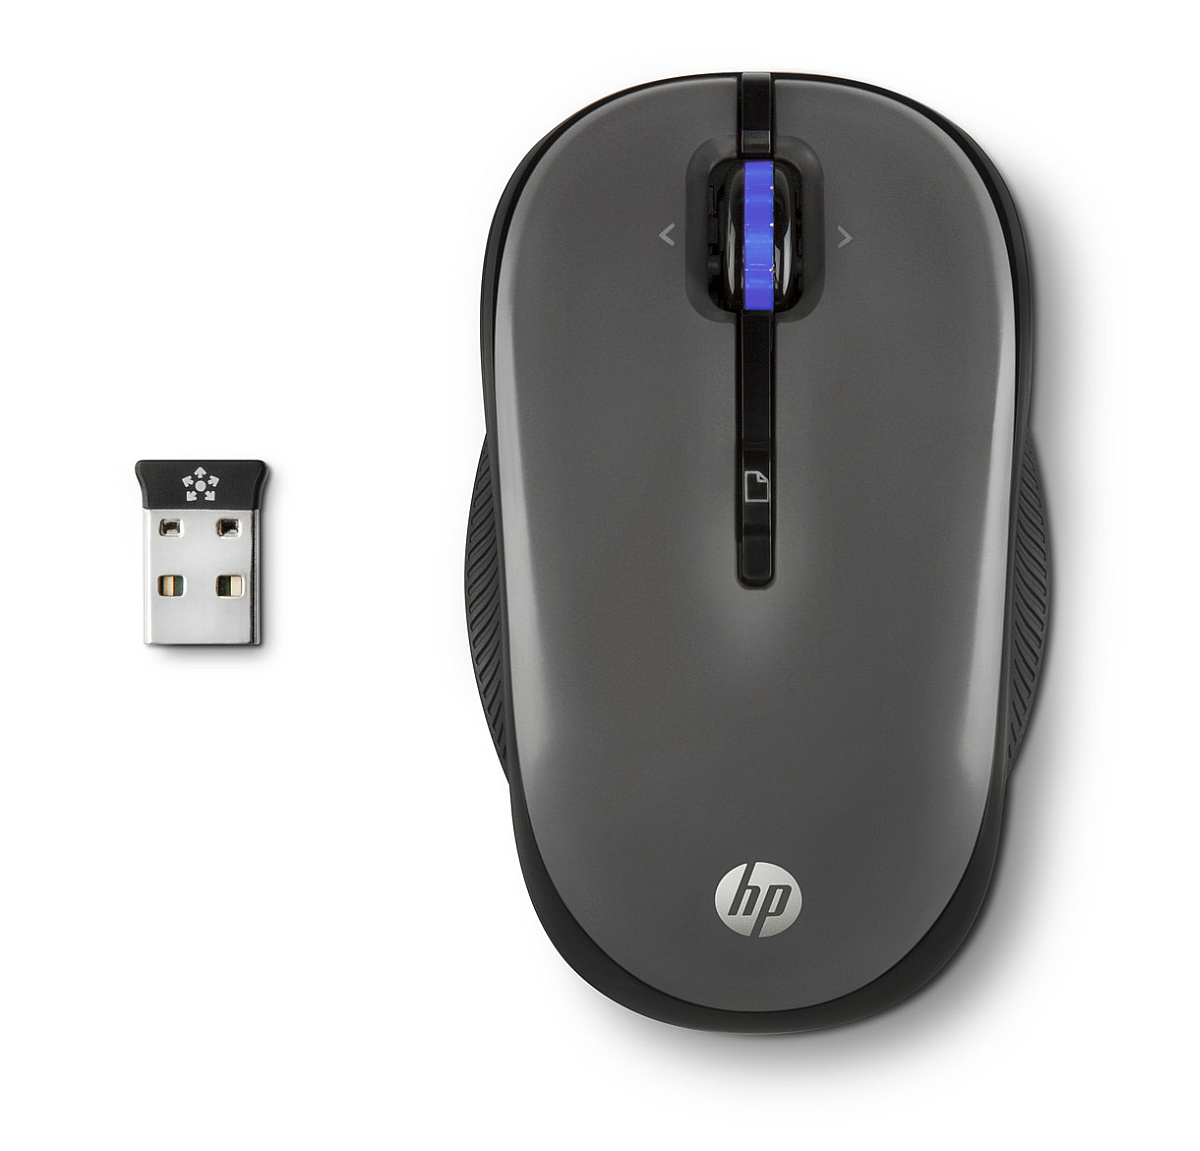 Bezdrátová myš HP X3300 - šedá (H4N93AA)